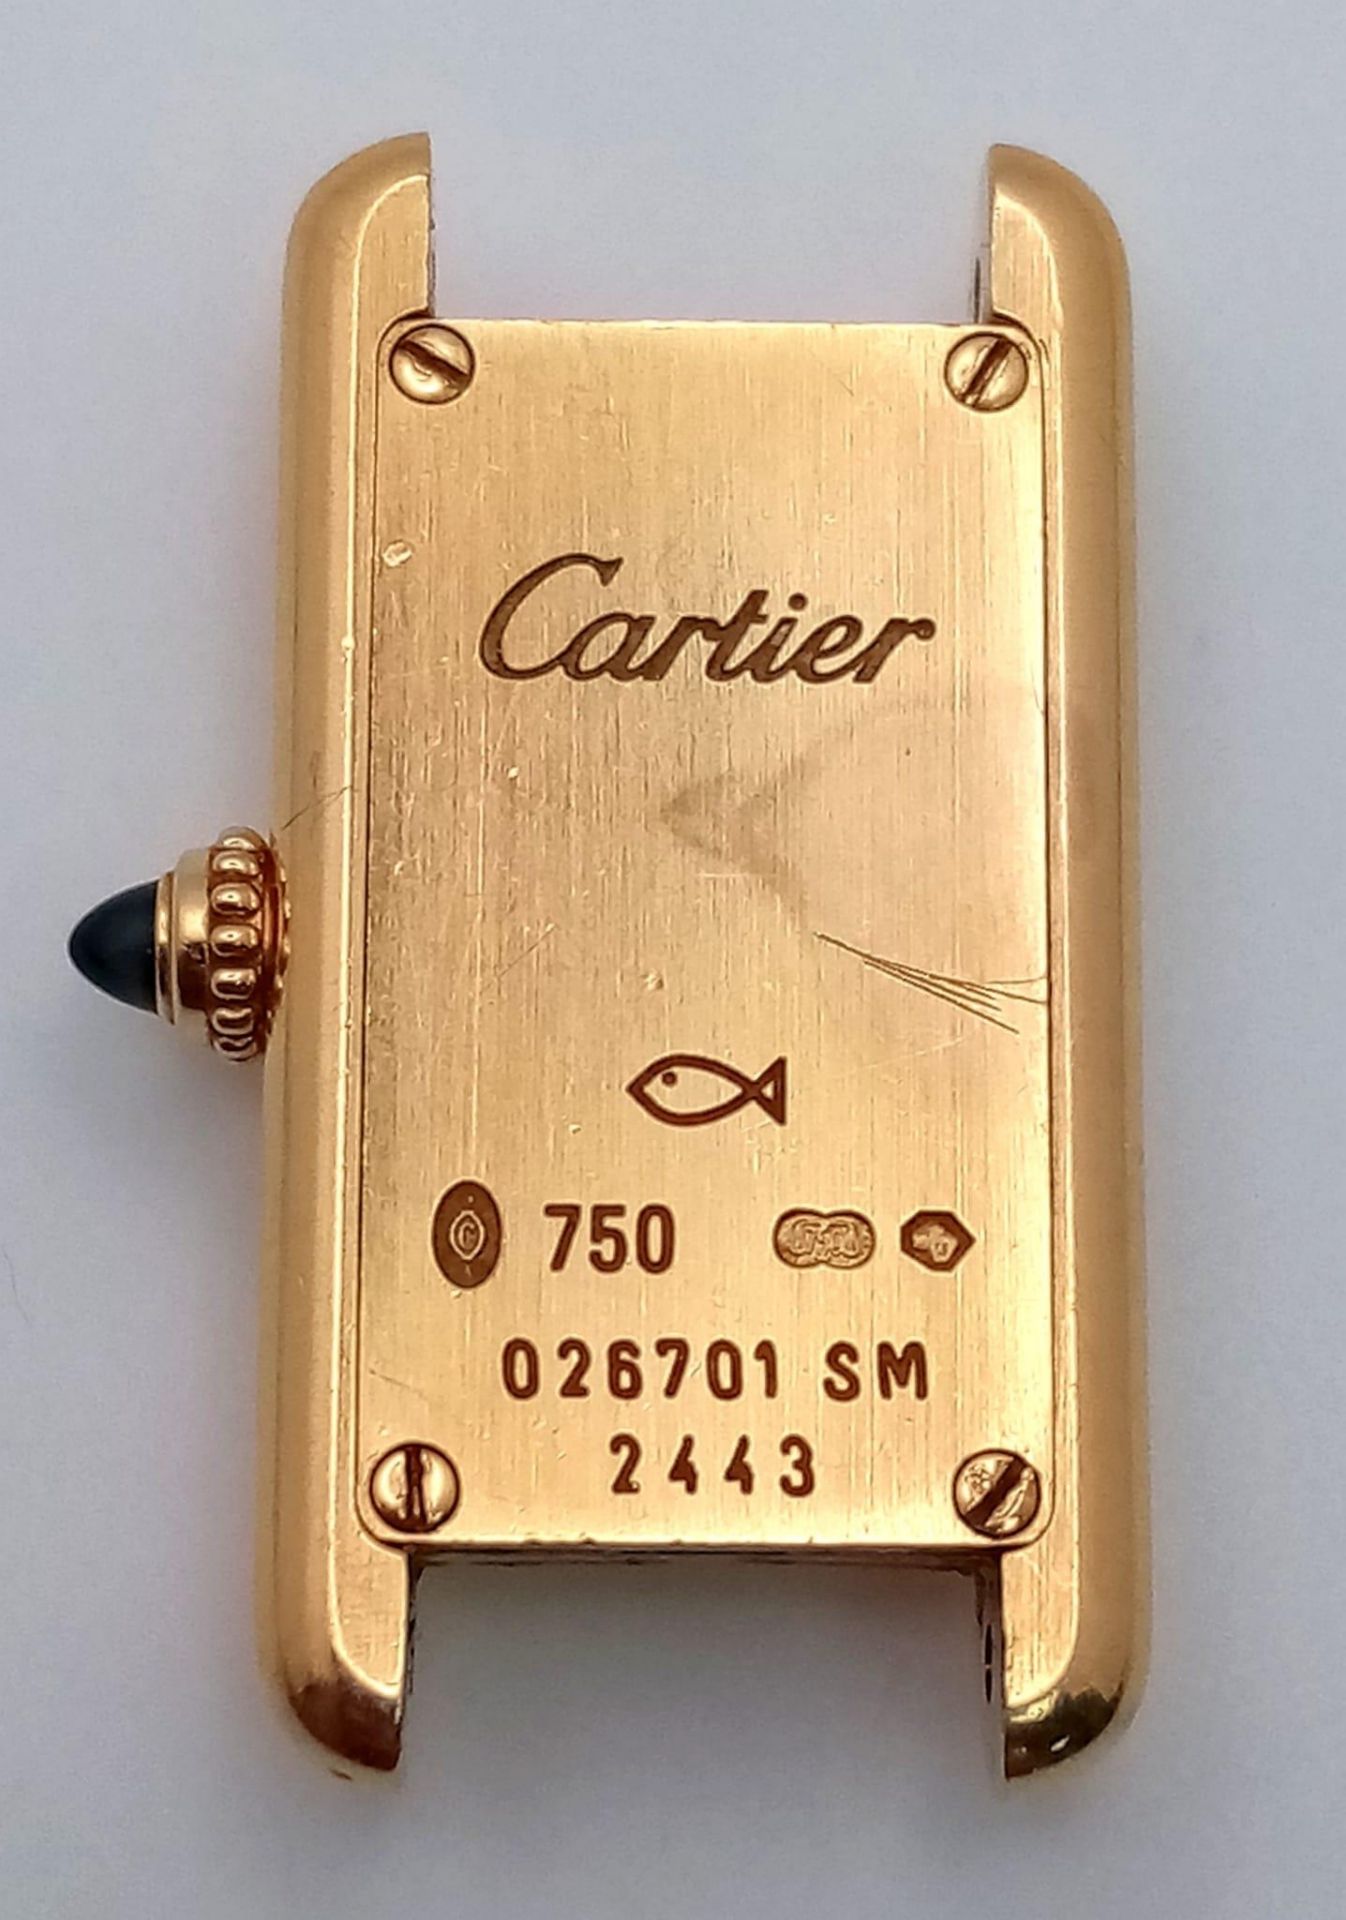 A Vintage 18K Gold Cartier Mini Tank Ladies Watch Case. 18k gold case with 2443 and other Cartier - Bild 5 aus 8